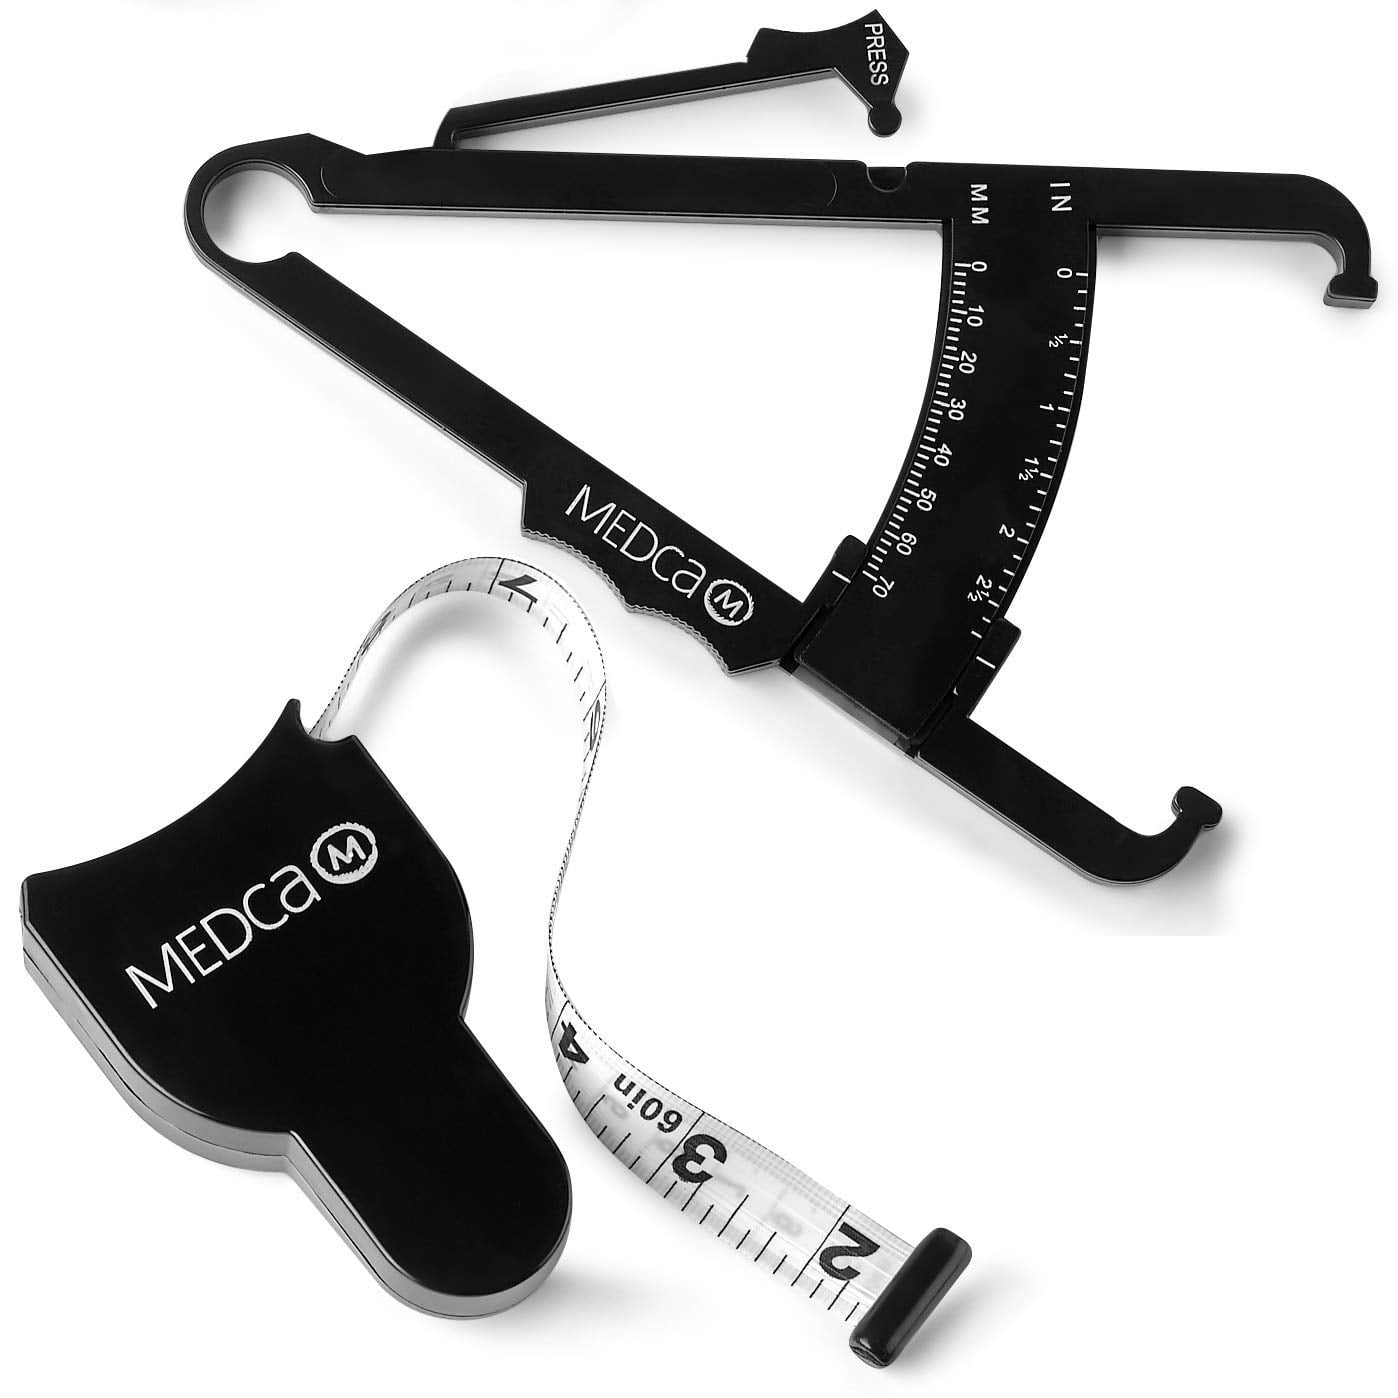 Syntek Digital Body Tape Measure 150cm LED Electronic Health Band Tape  Ruler Circumference Linear Measure Mode Body Fat Calipers